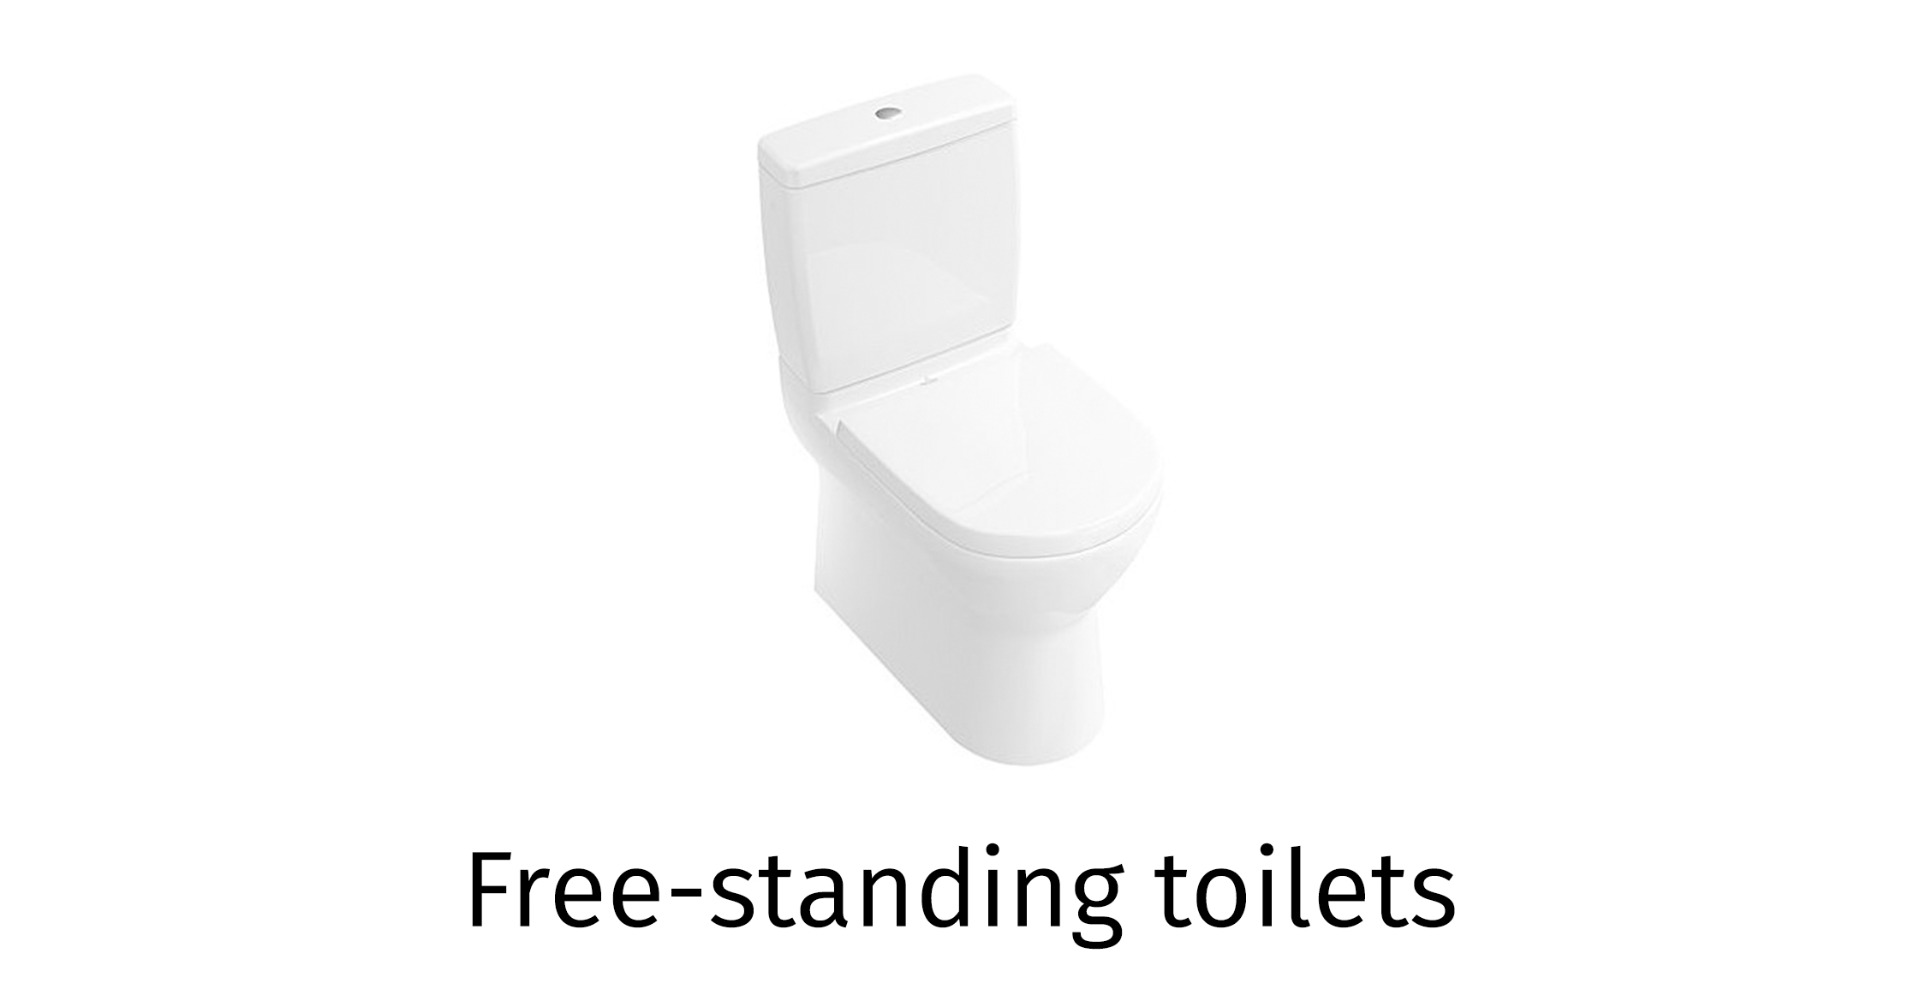 Free-standing toilet